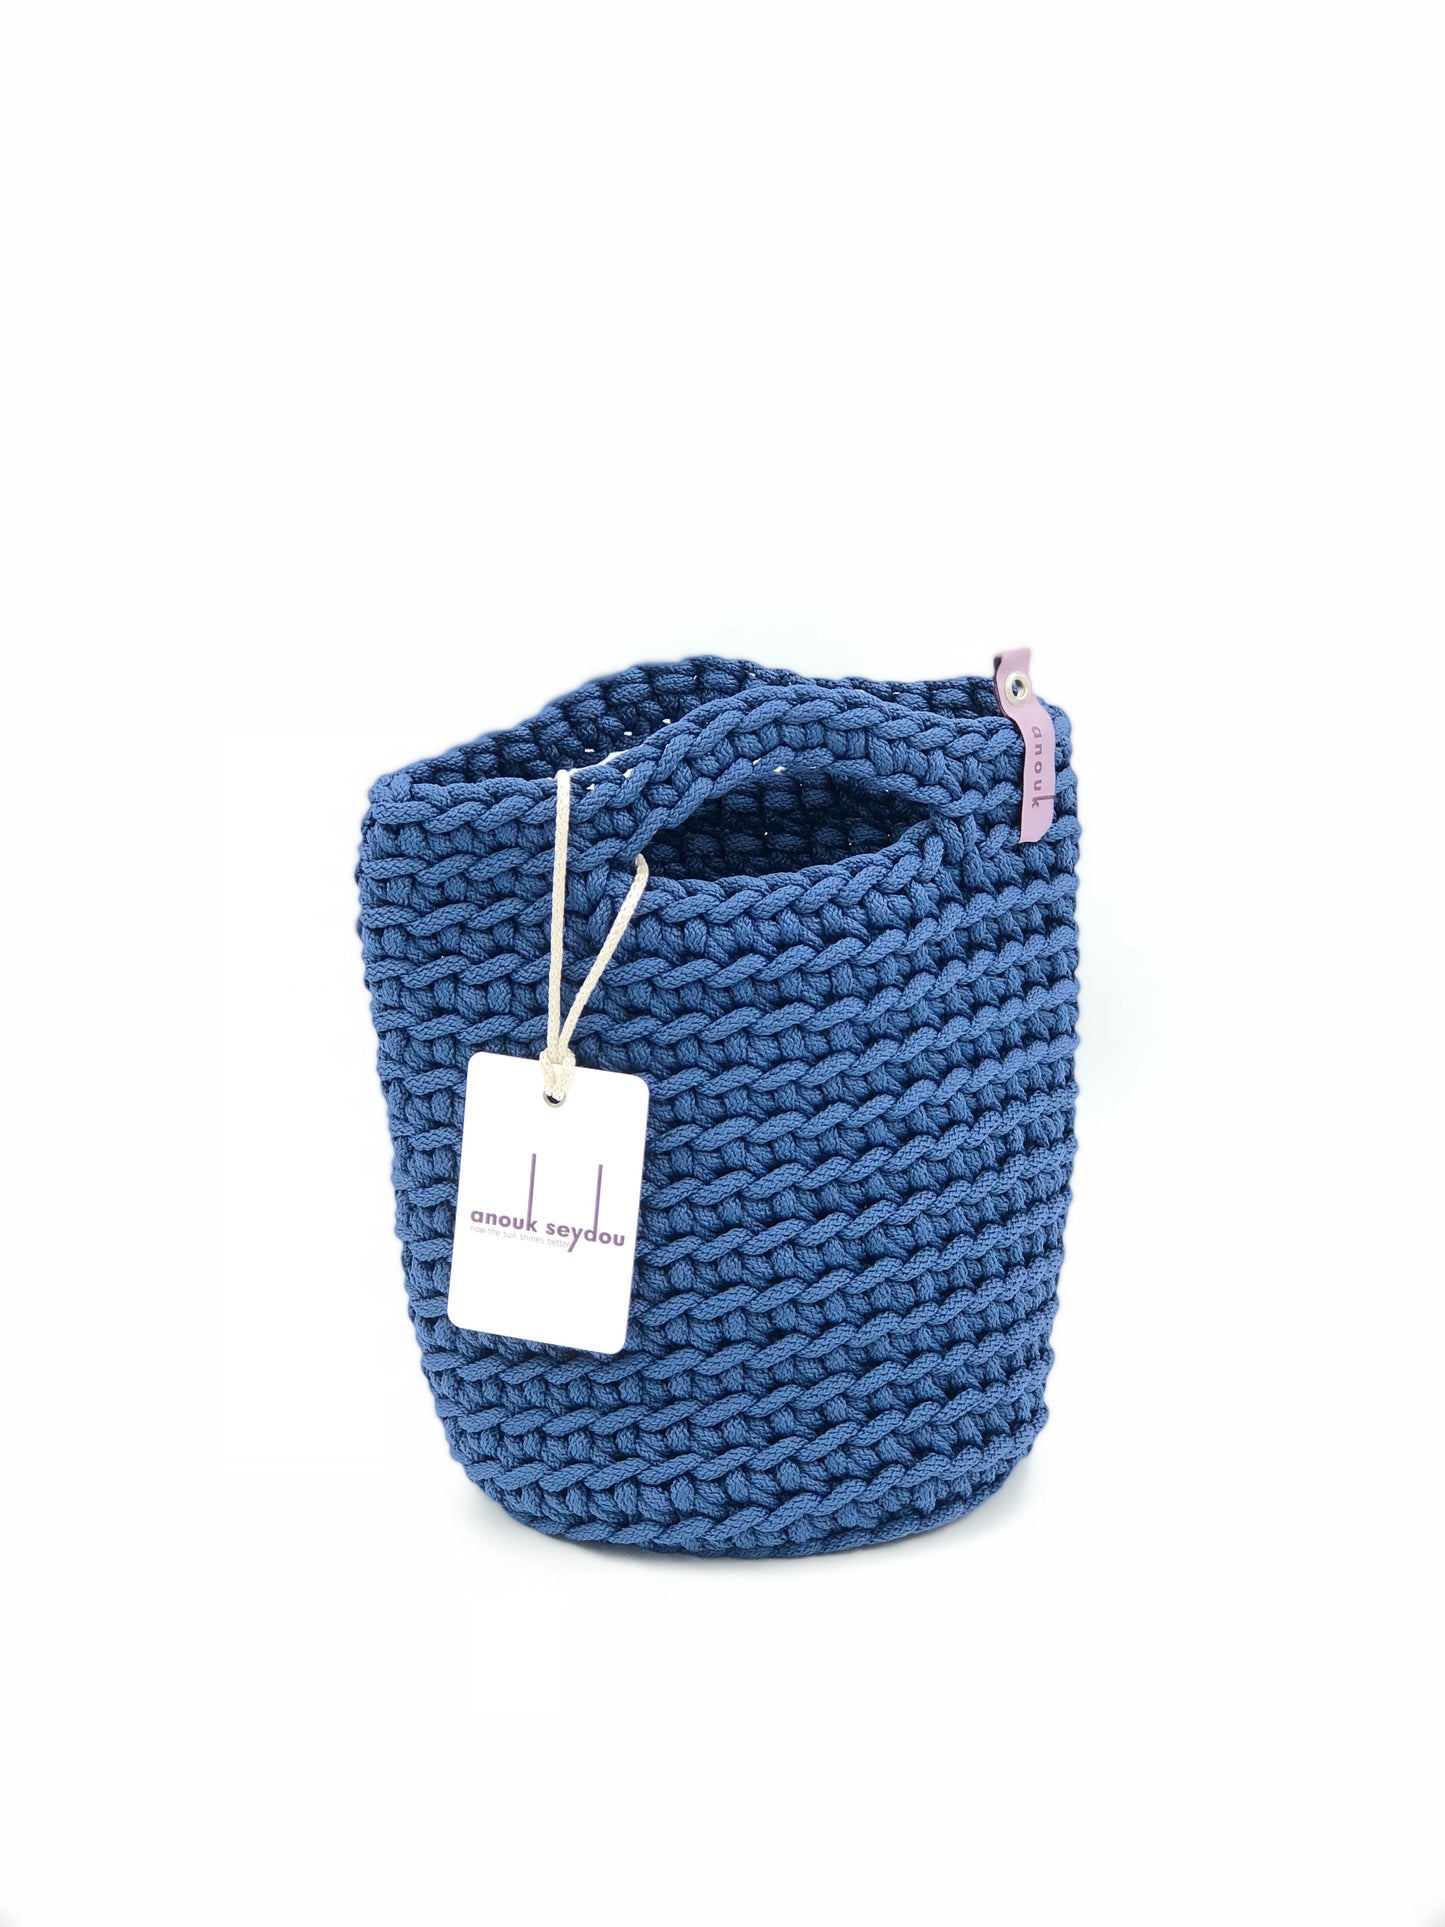 Tote Bag Scandinavian Style Navy Blue Crochet   Size MINI